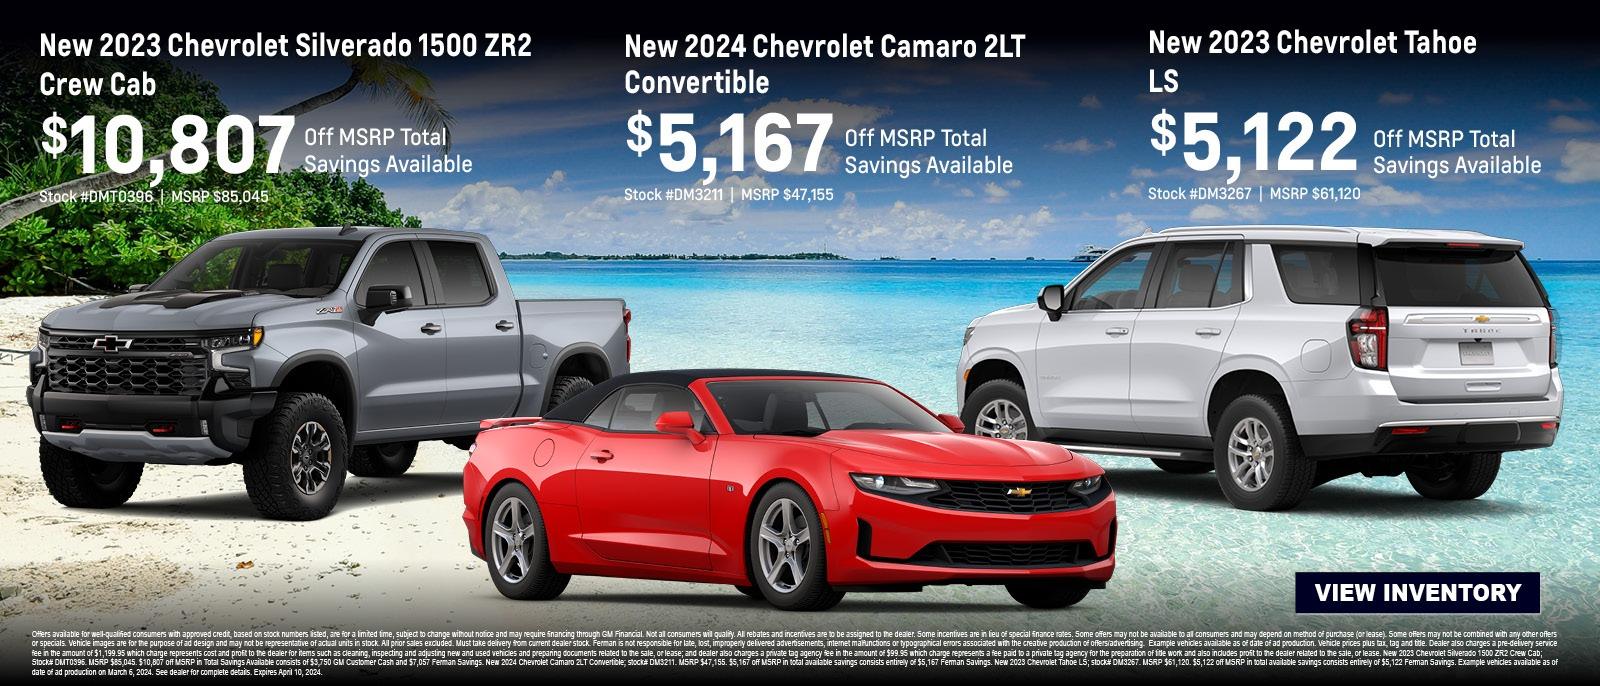 March Savings on New 2023 Chevrolet Silverado 1500, 2024 Chevrolet Camaro and 2023 Chevrolet Tahoe